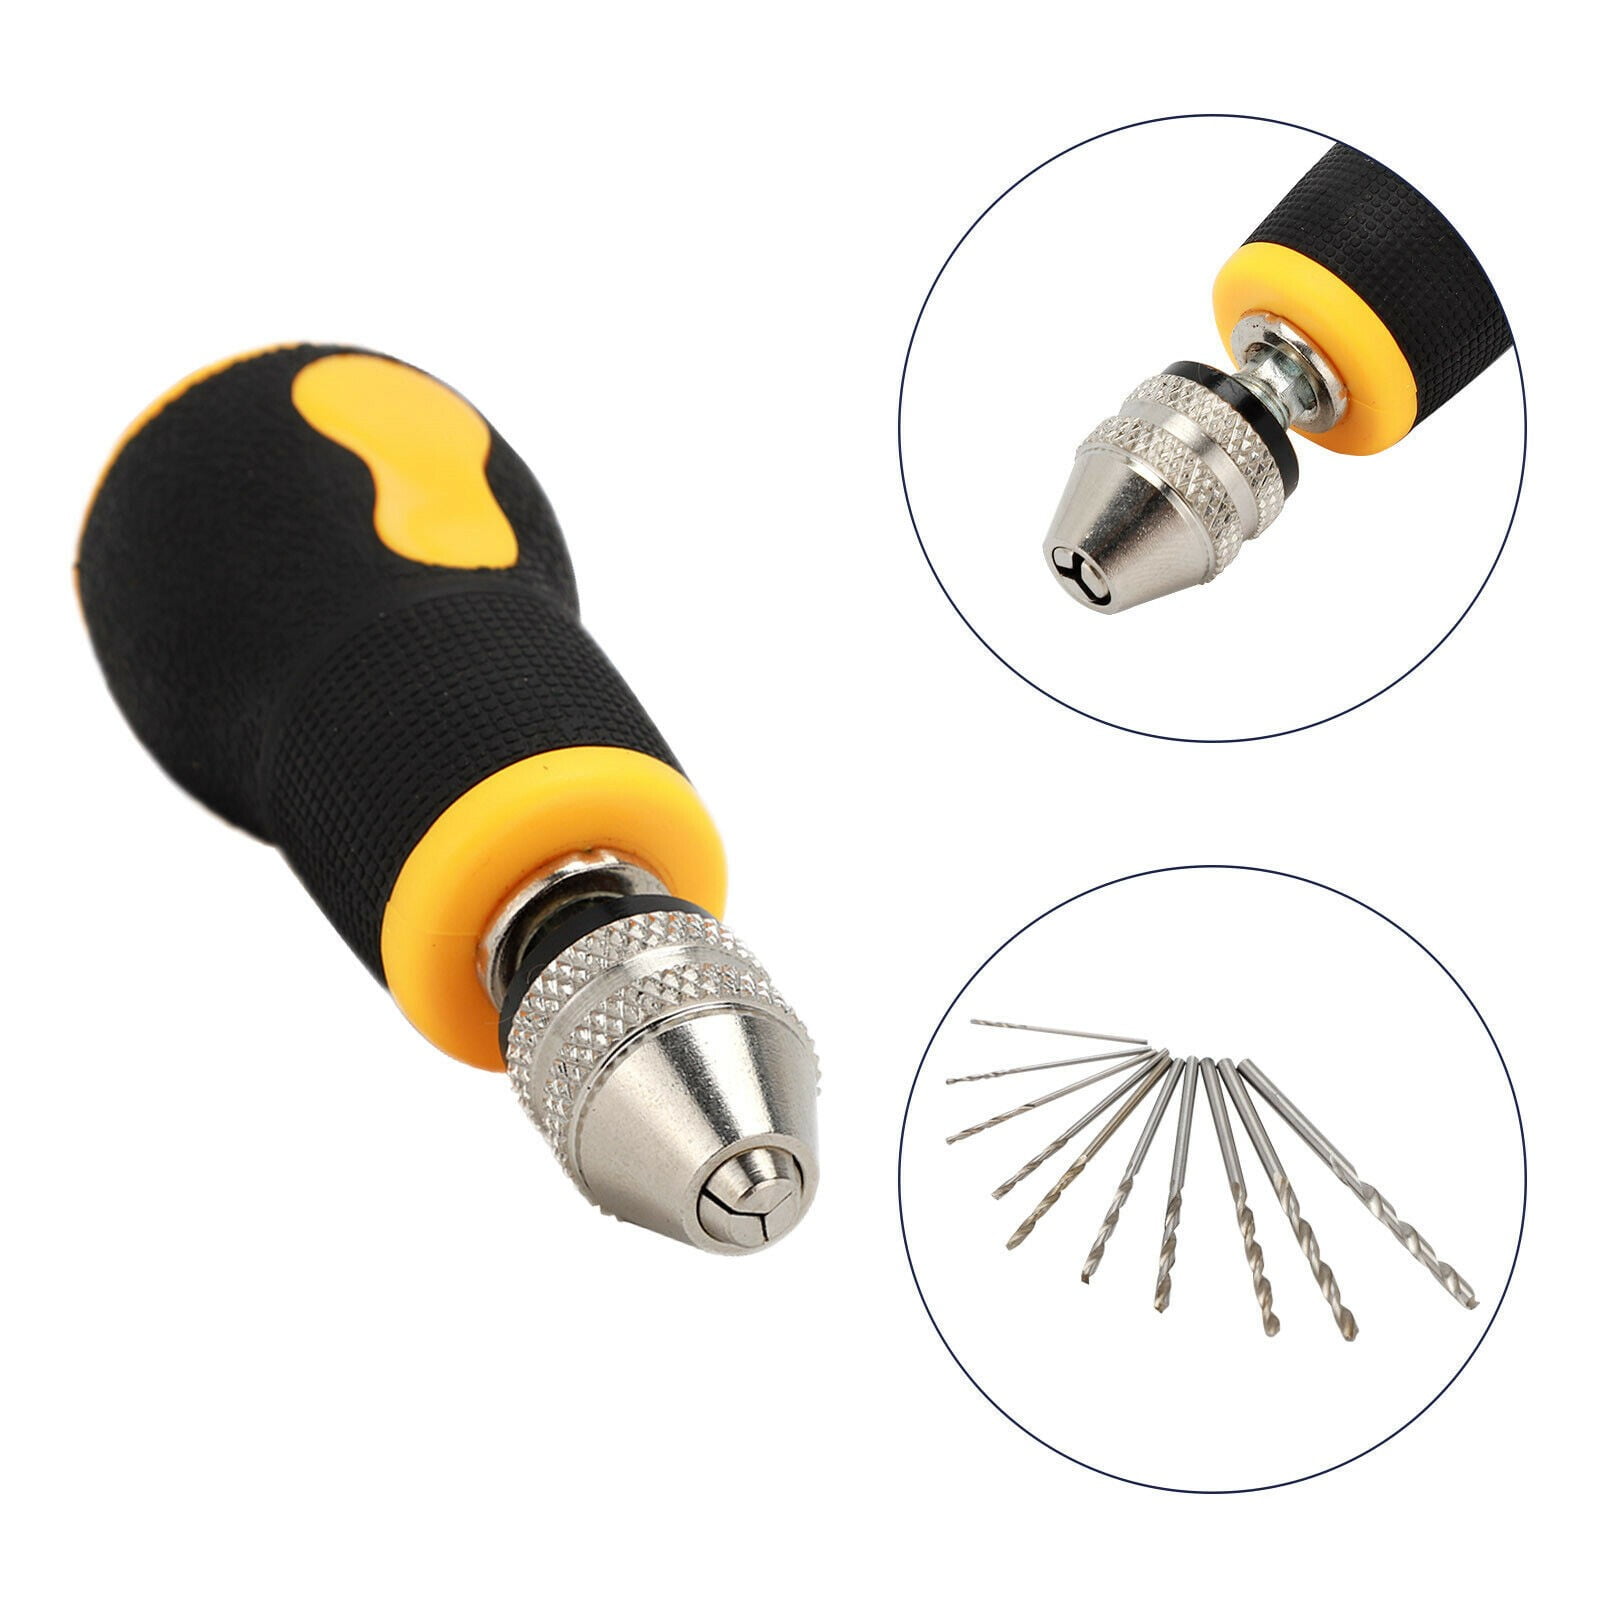 Leye Micro Mini Hand Drill Tool, Portable Tool Set Small Hand Drill & 10  pcs Twist Drill Bits 0.8-3.0mm Precision Pin Vise Woodworking Hand Drill  for